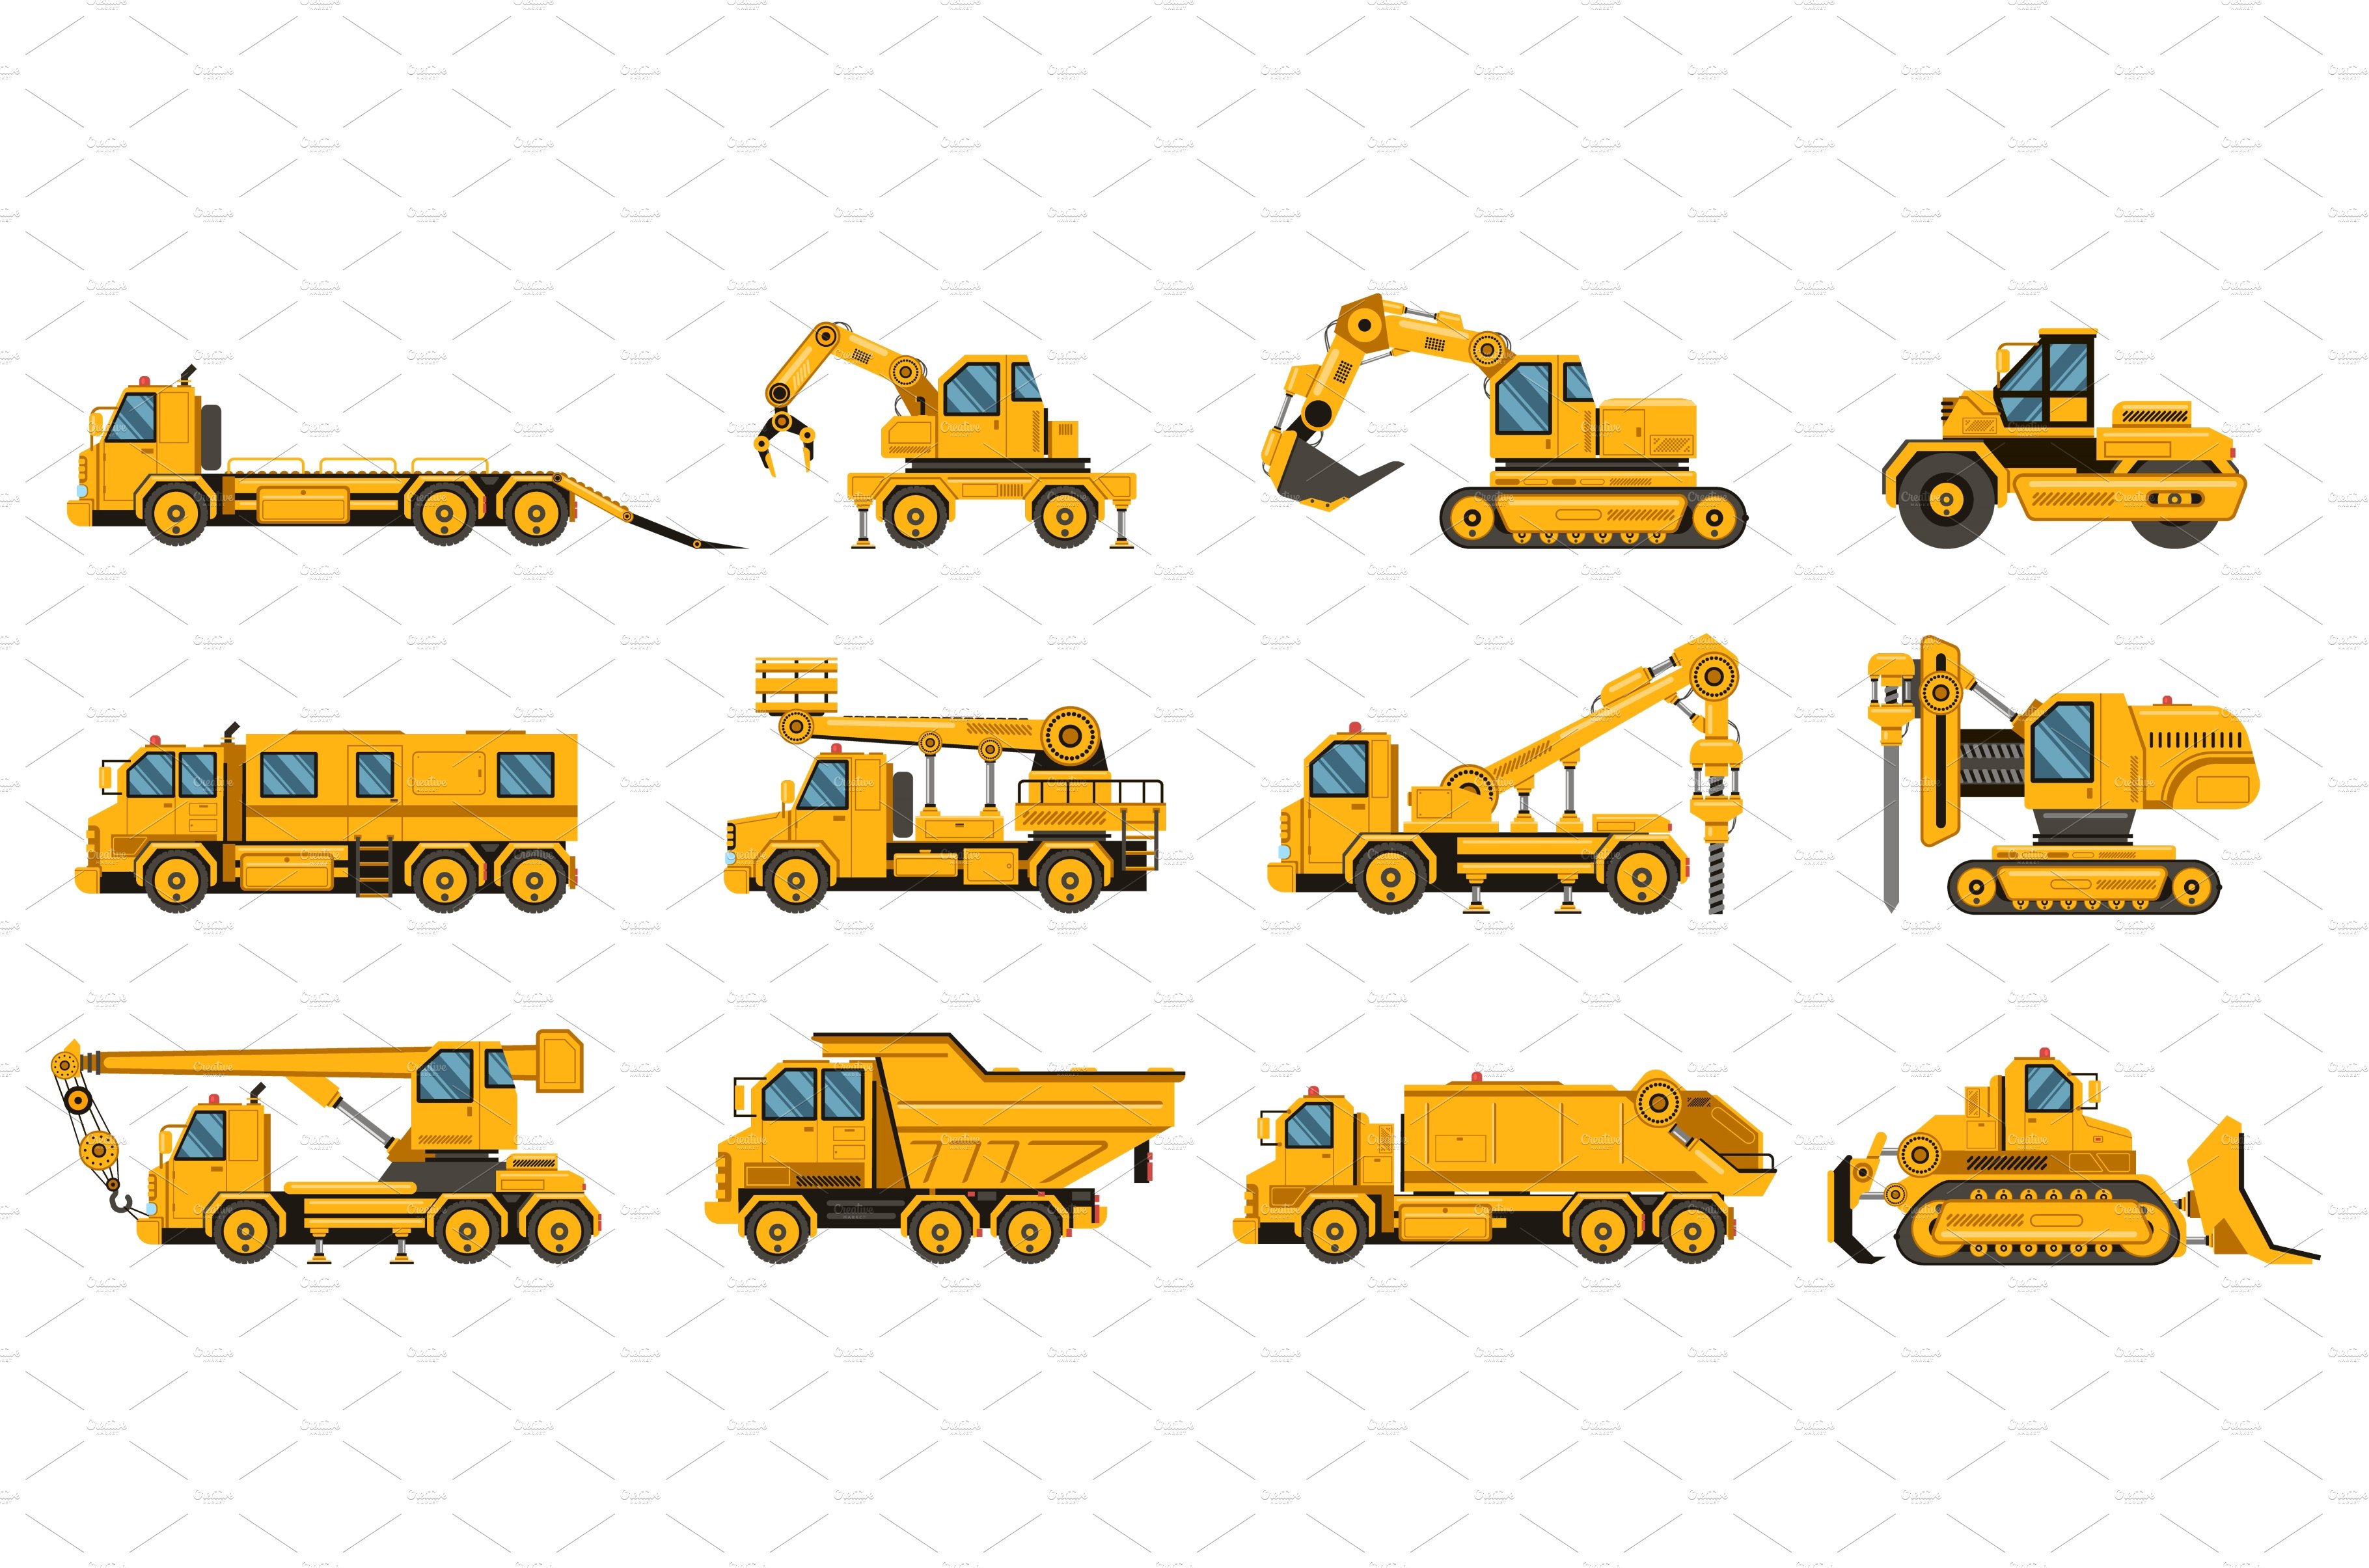 Construction trucks. Equipment cover image.